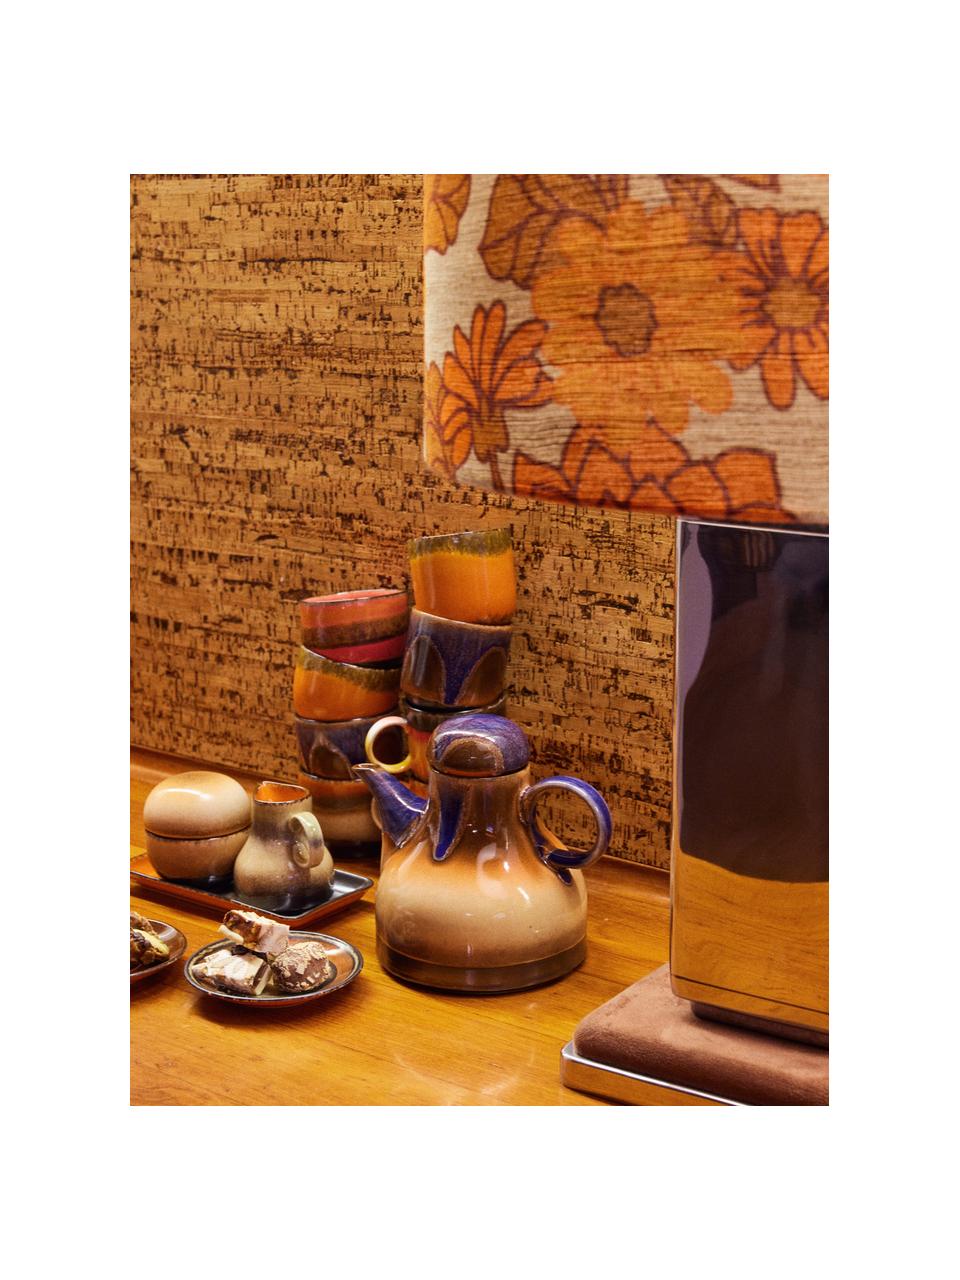 Set de tazas artesanales de cerámica 70's, 4 uds., Cerámica, Multicolor, Ø 8 x Al 7 cm, 230 ml